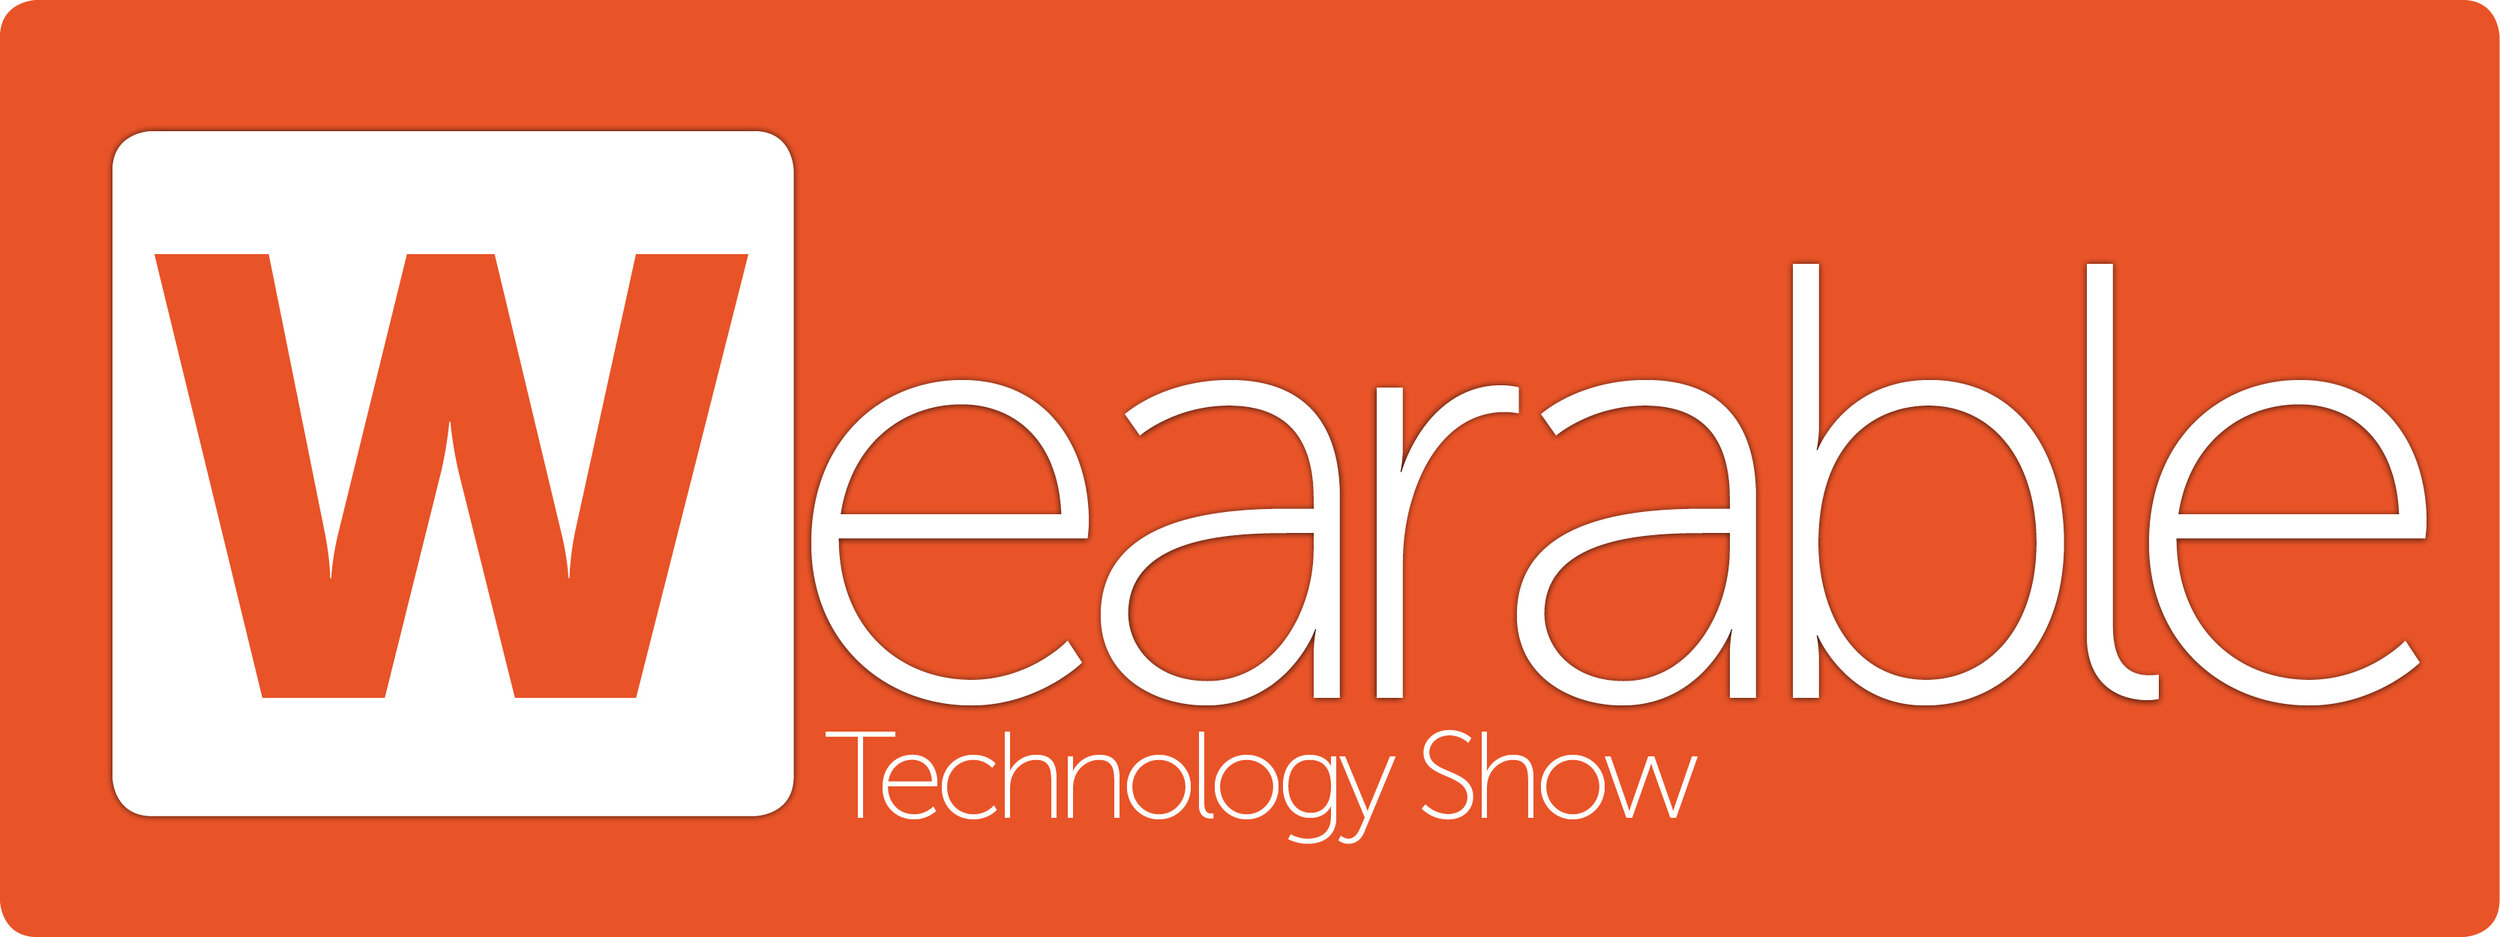 Wearable_Technology_Show_Logo.jpg